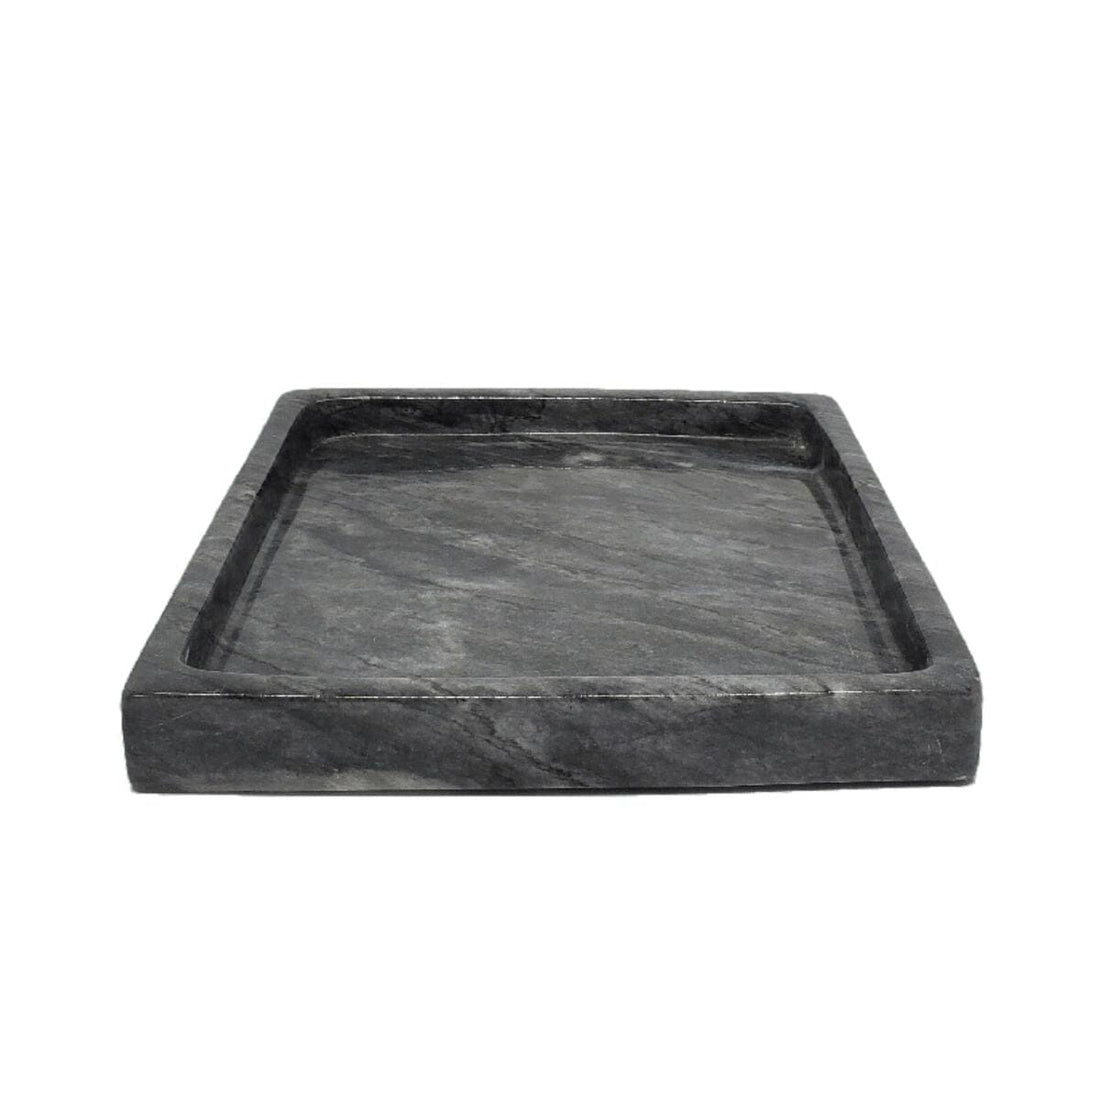 HairMNL Square Marble Bath Tray 8x8" in Black